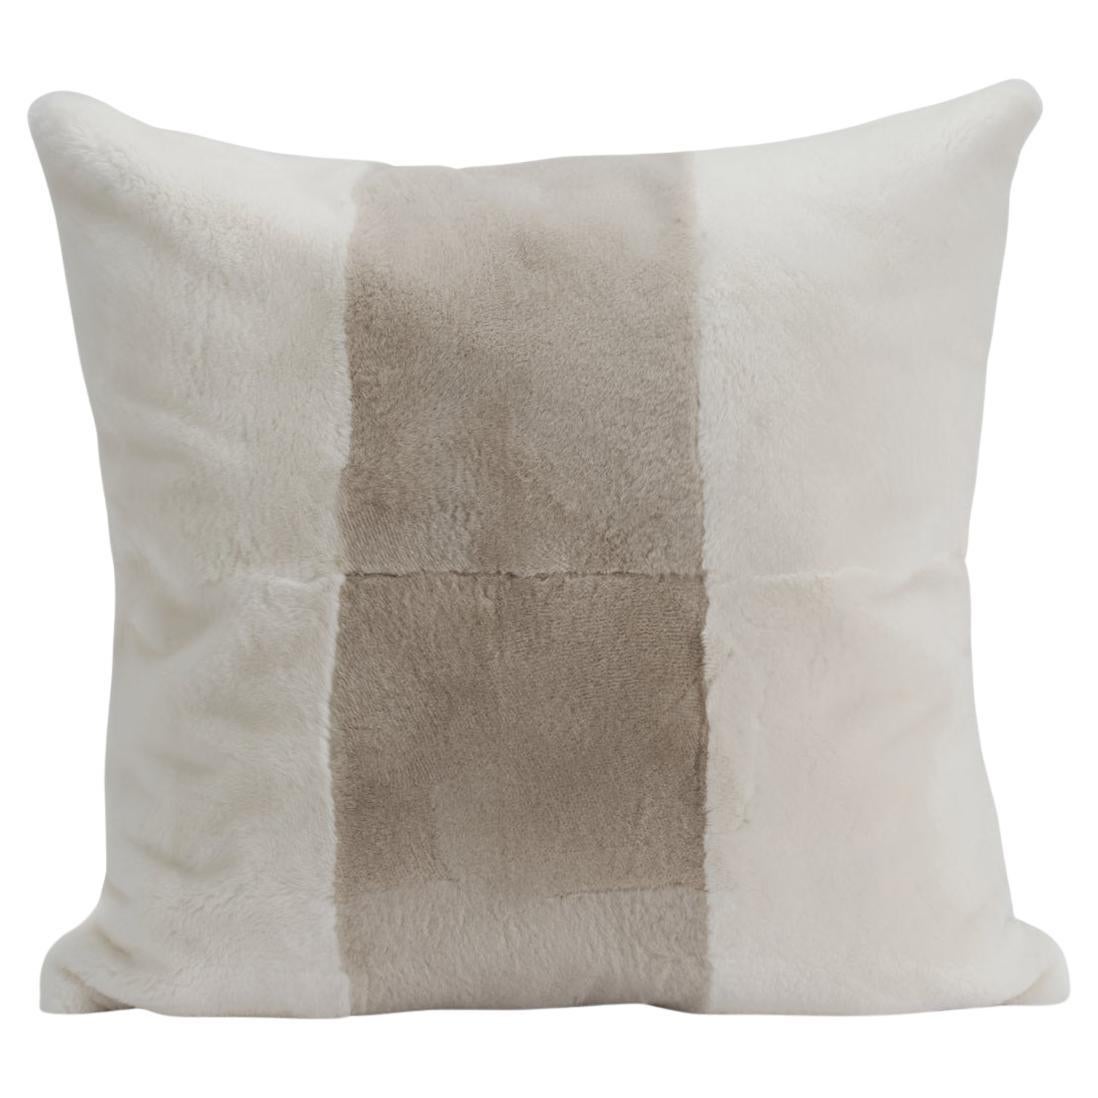 Yang South America Beaver Castorino White Wool Fur Pillow Cushion by Muchi Decor For Sale